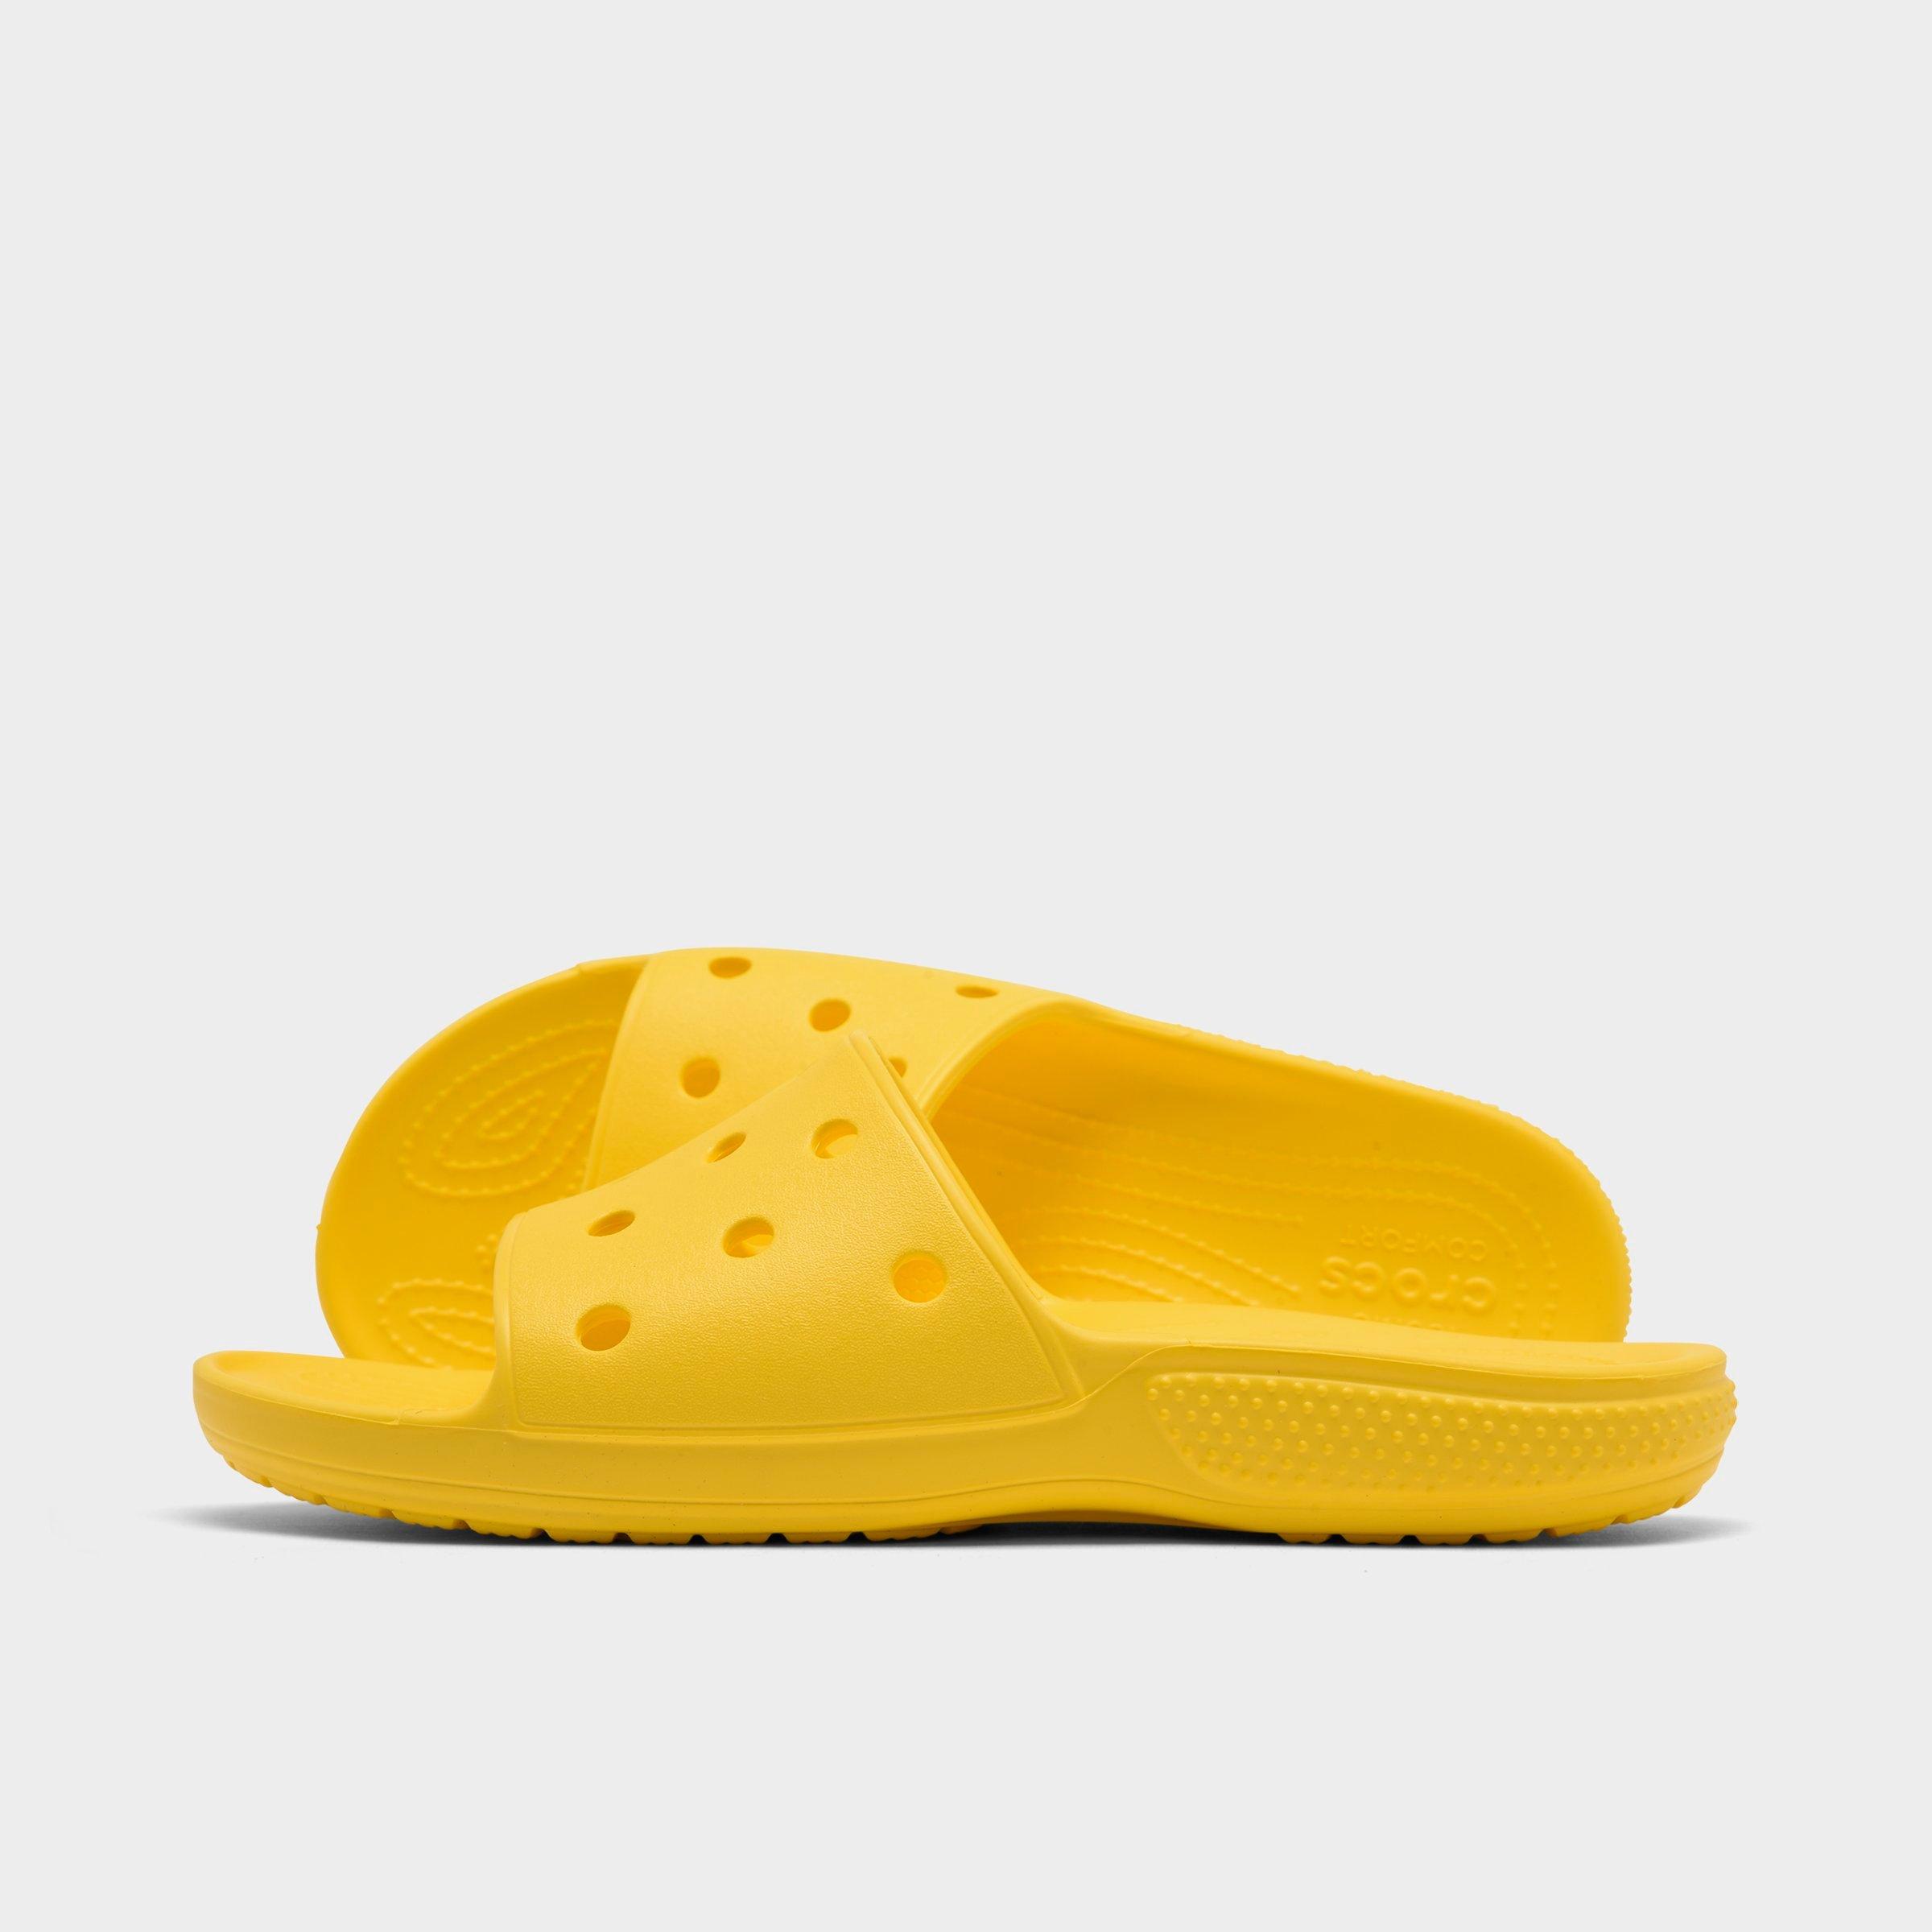 yellow crocs sandals